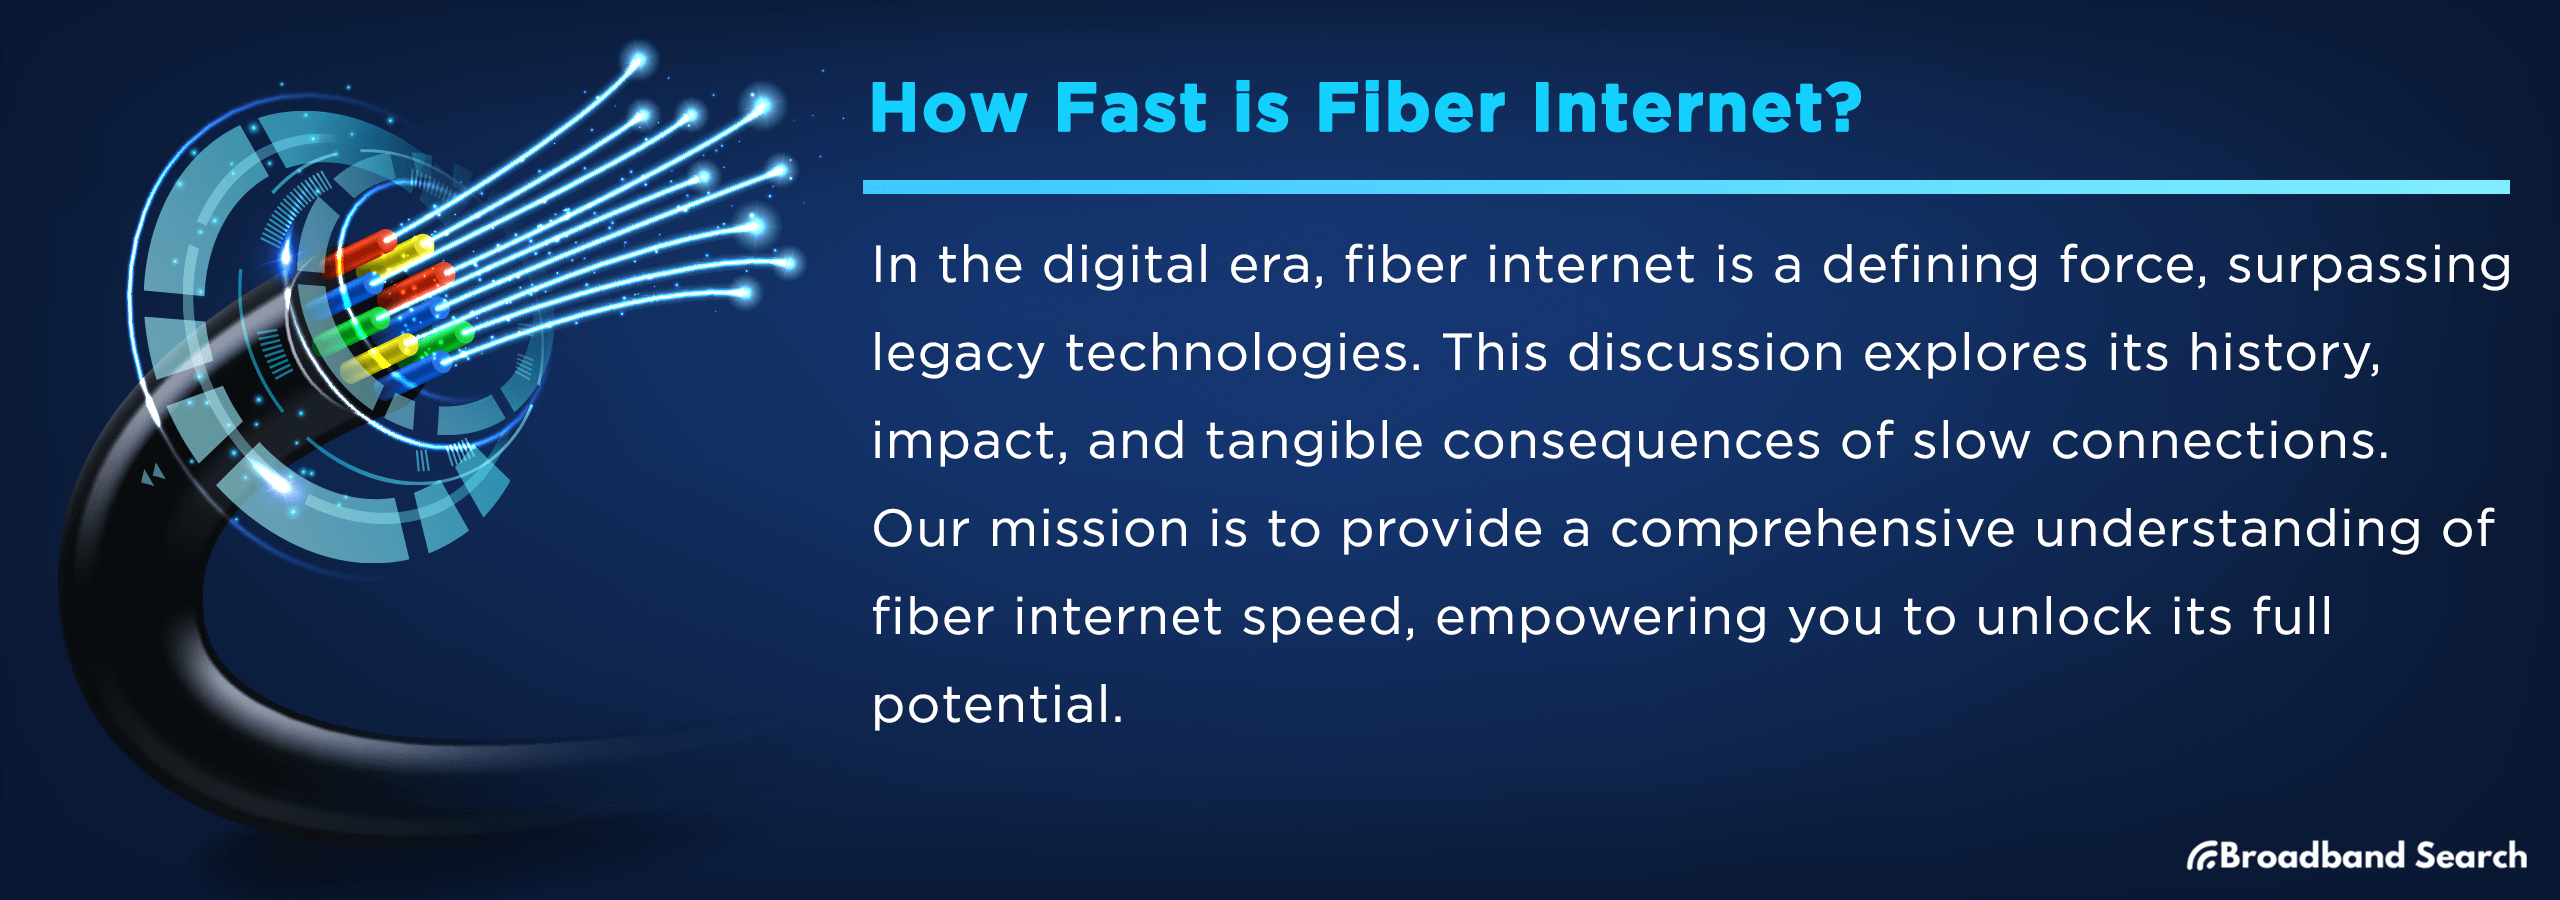 How Fast is Fiber Internet?